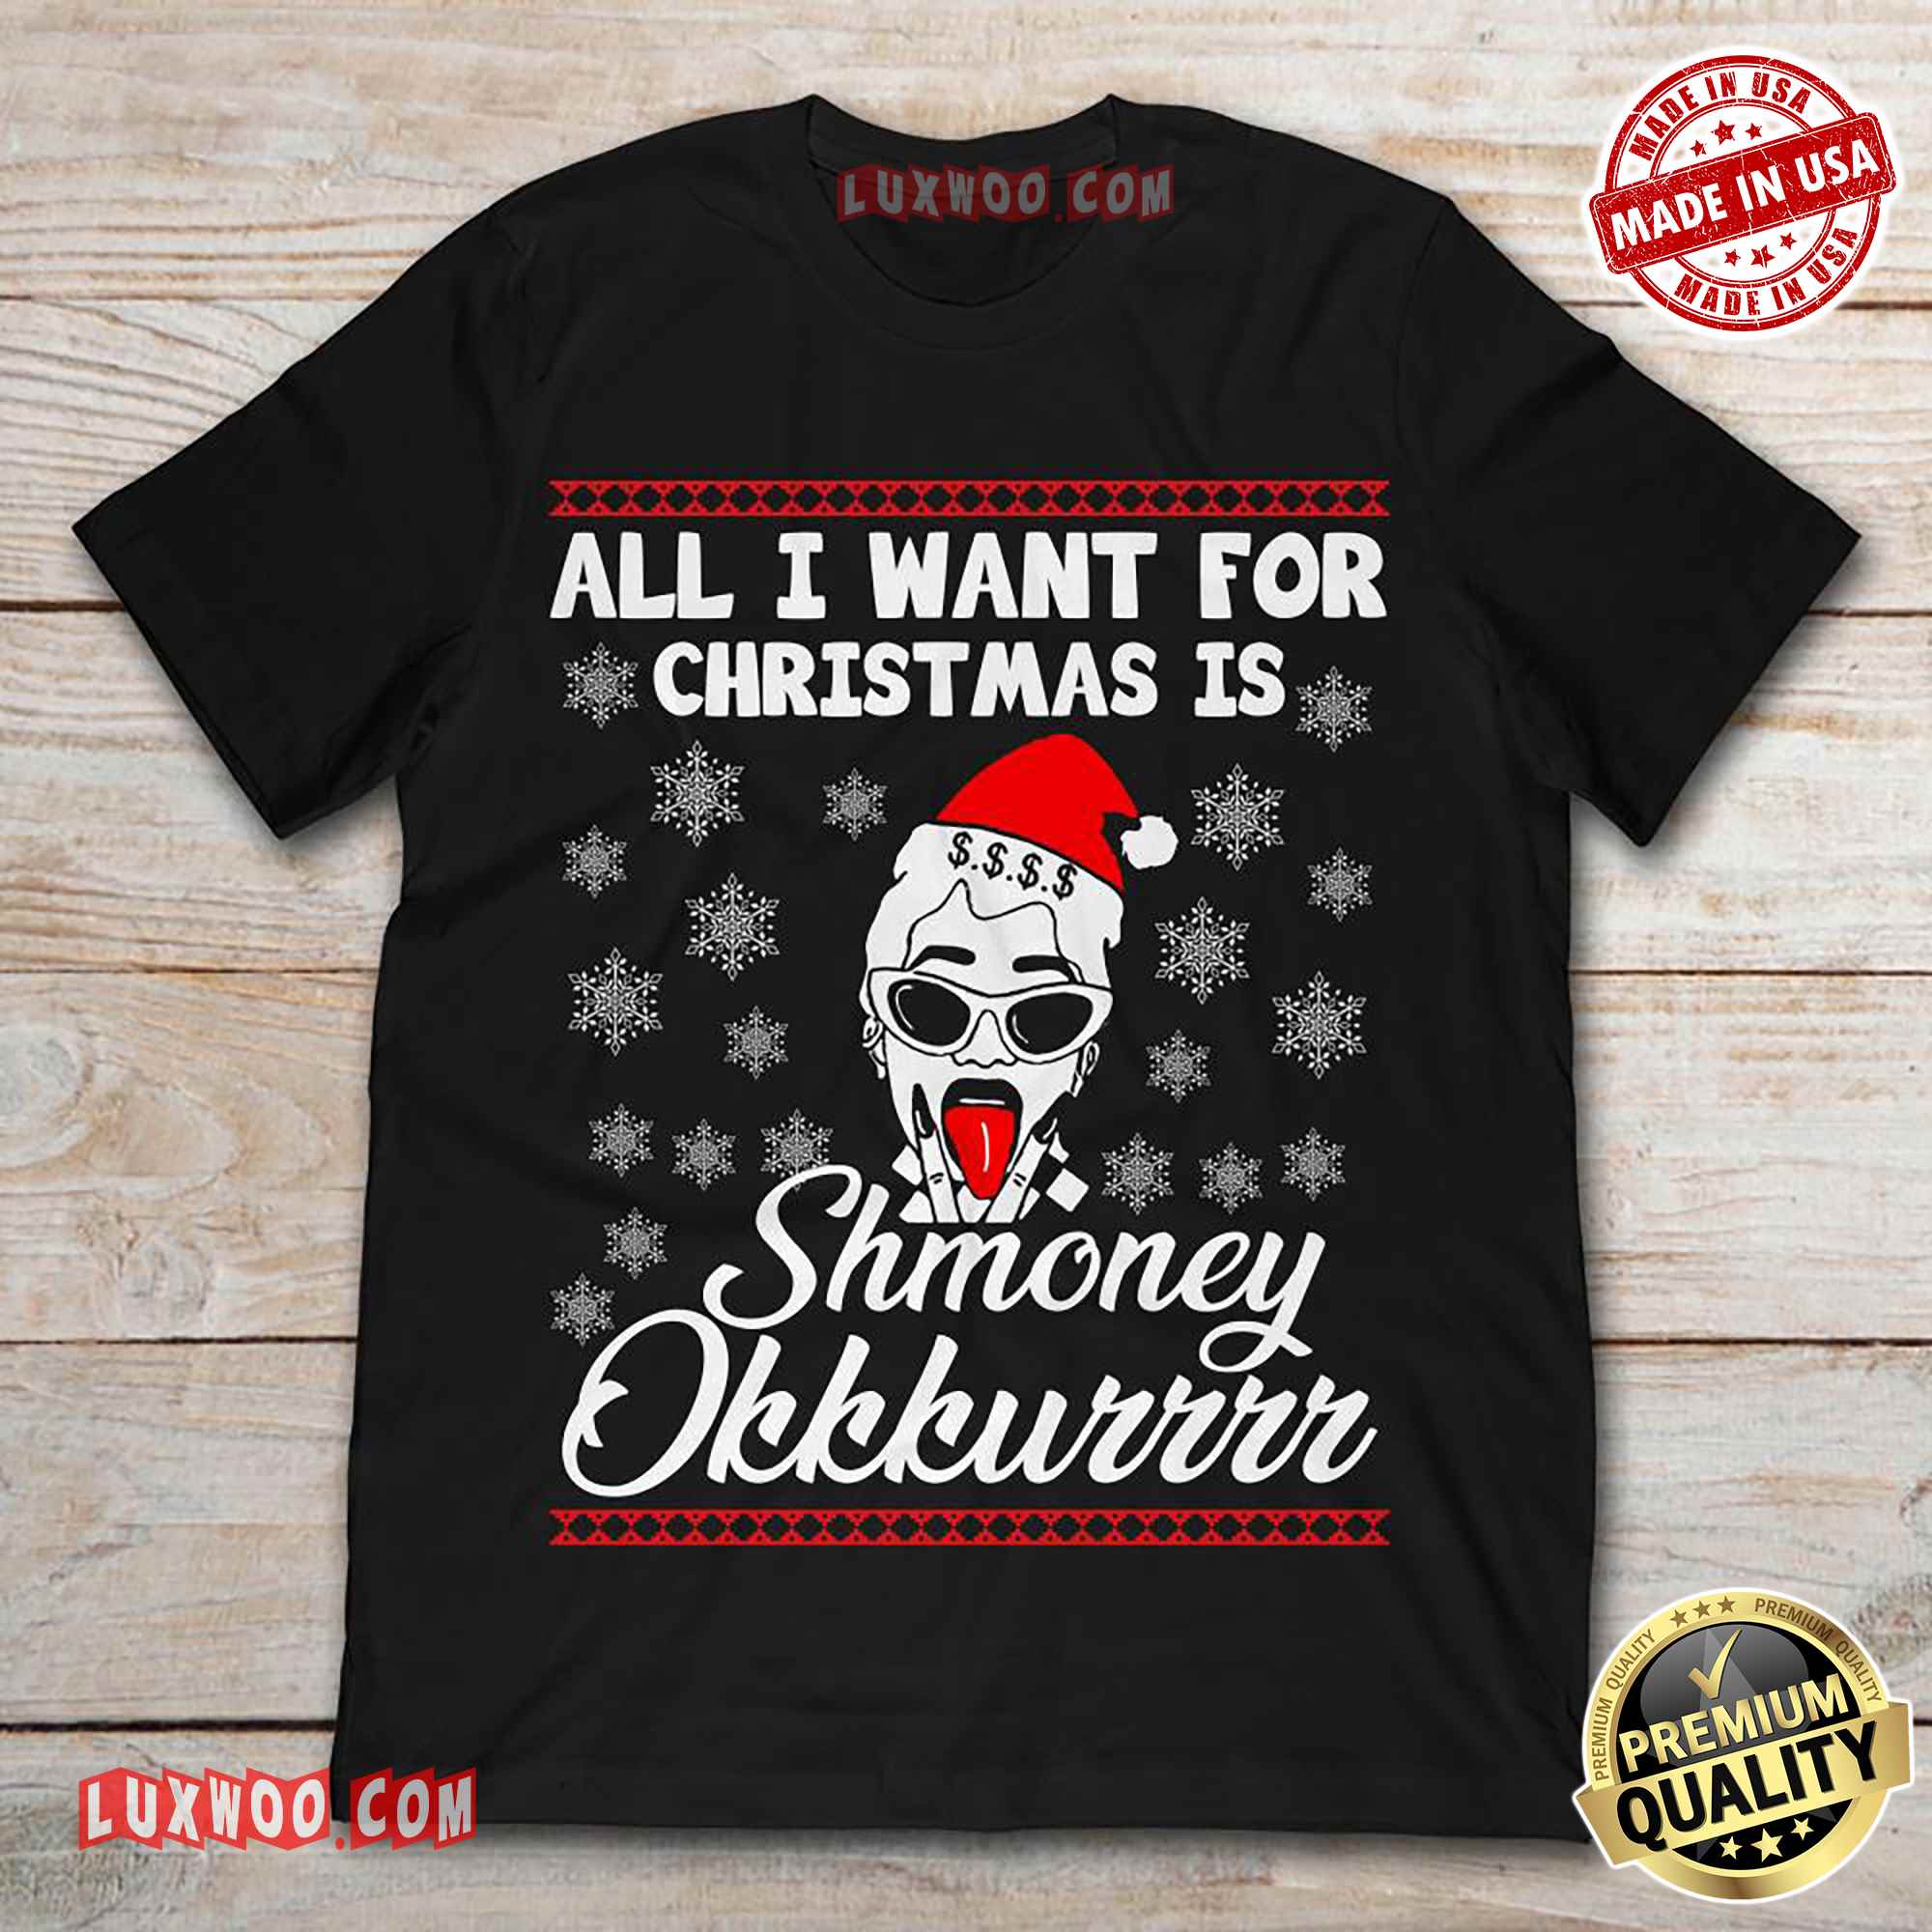 All I Want For Christmas Is Shmoney Okkkurrr Cardi B Shirt